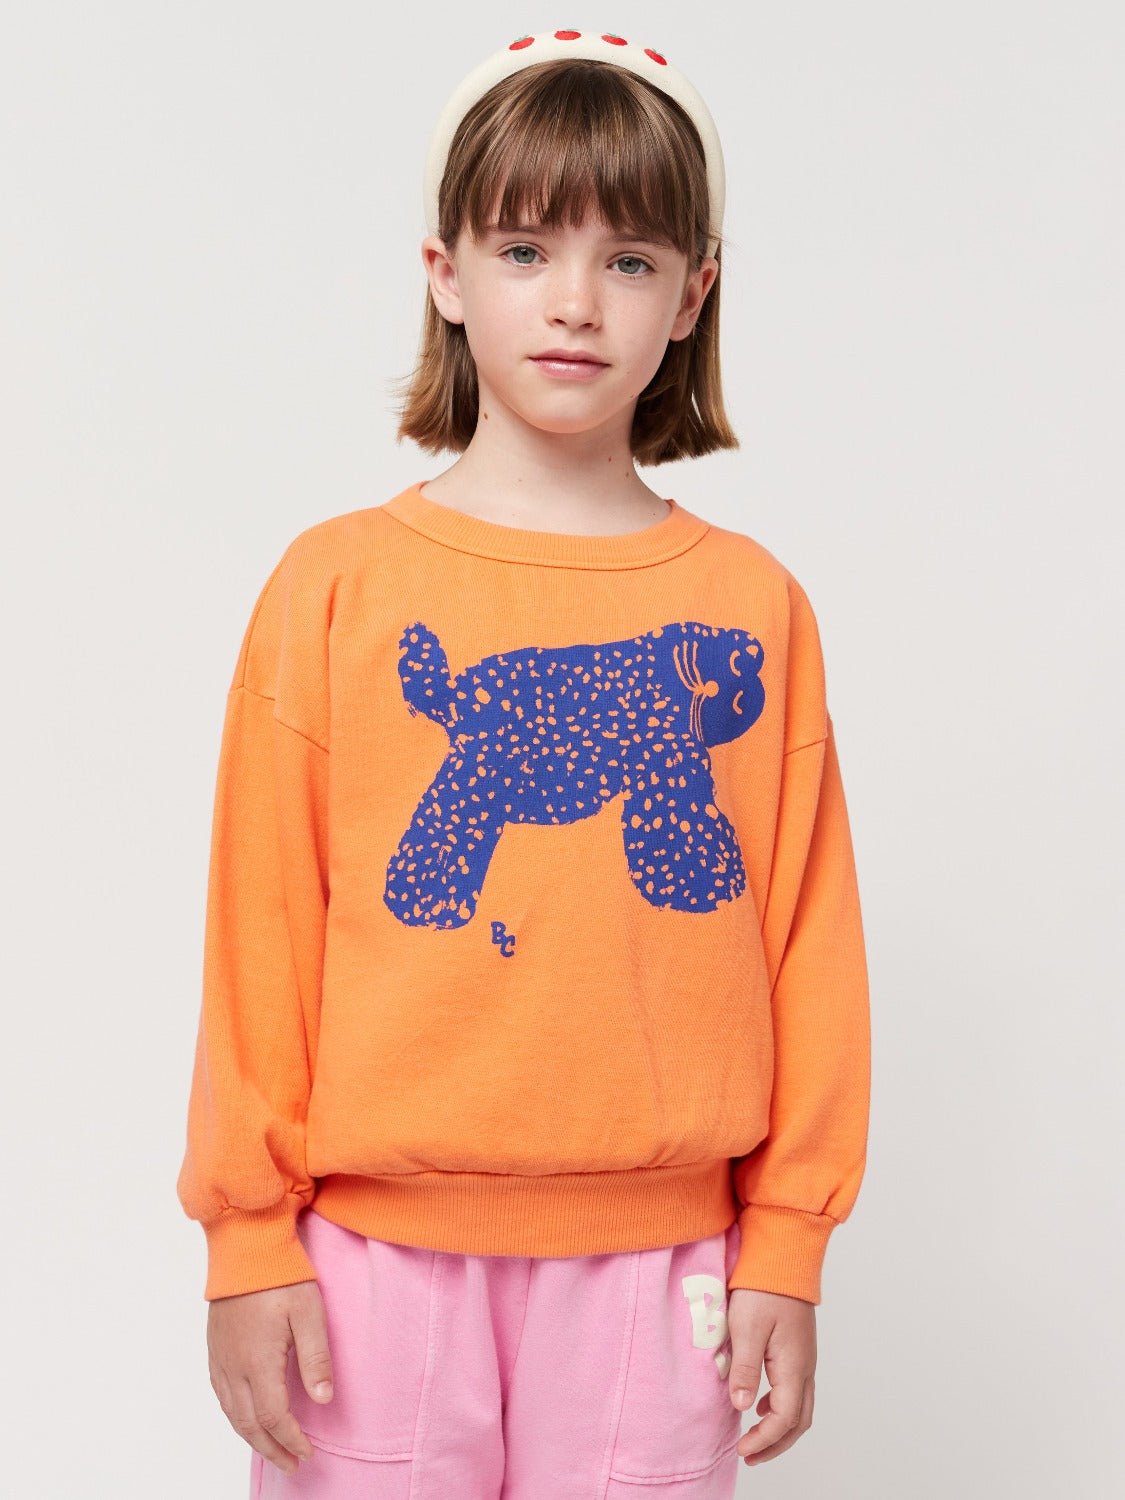 Big Cat Sweatshirt by Bobo Choses - Petite Belle